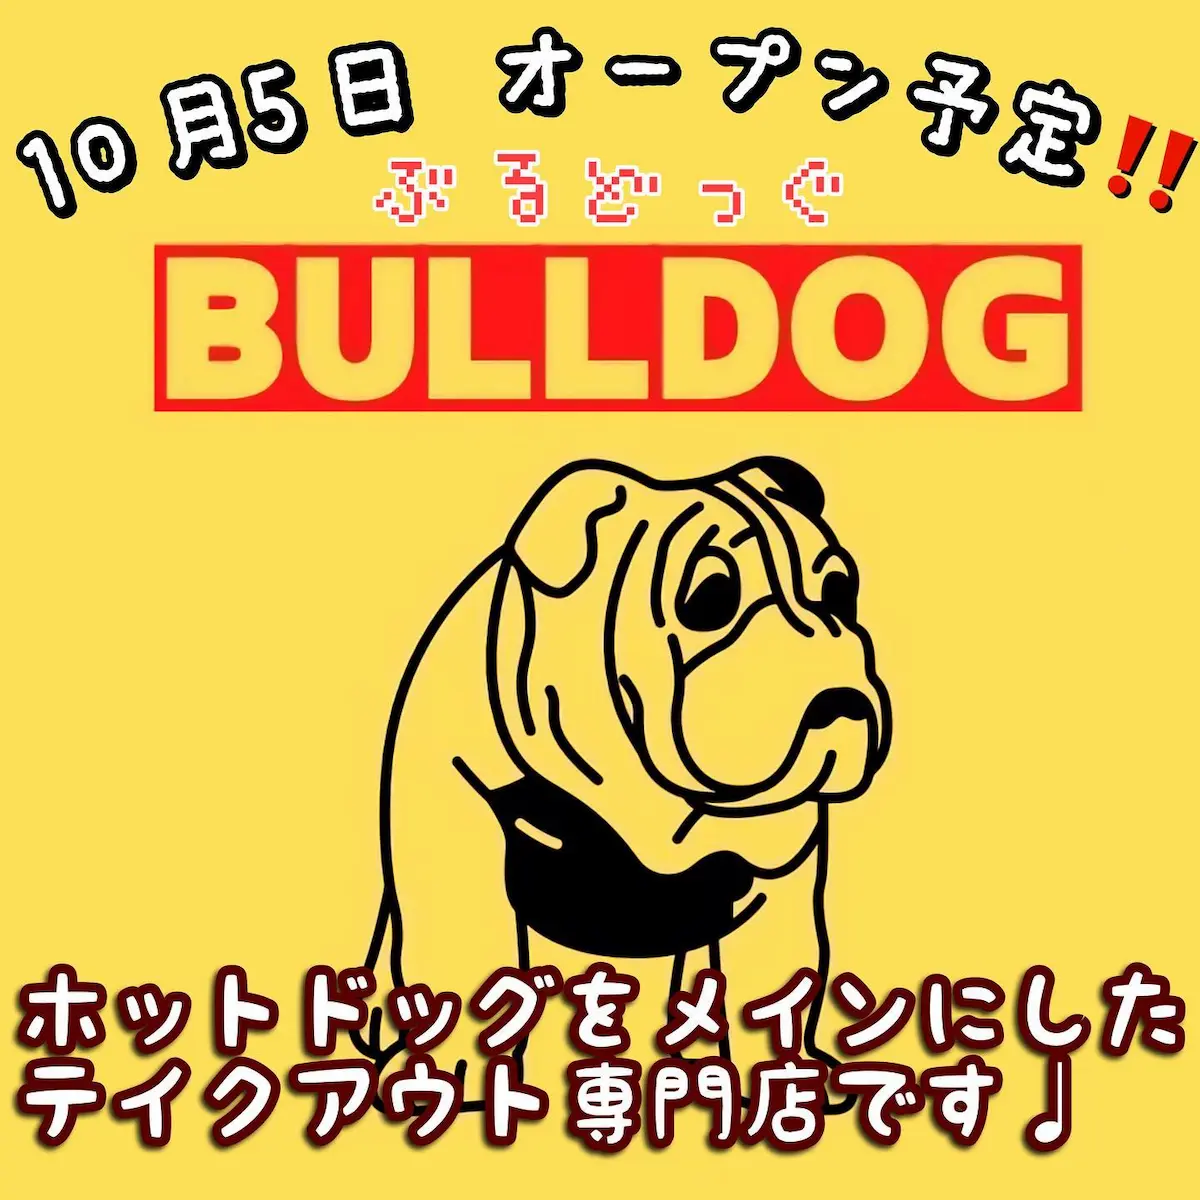 BULLDOGってホットドッグ専門店が10月5日にオープンしてるみたい。大川市